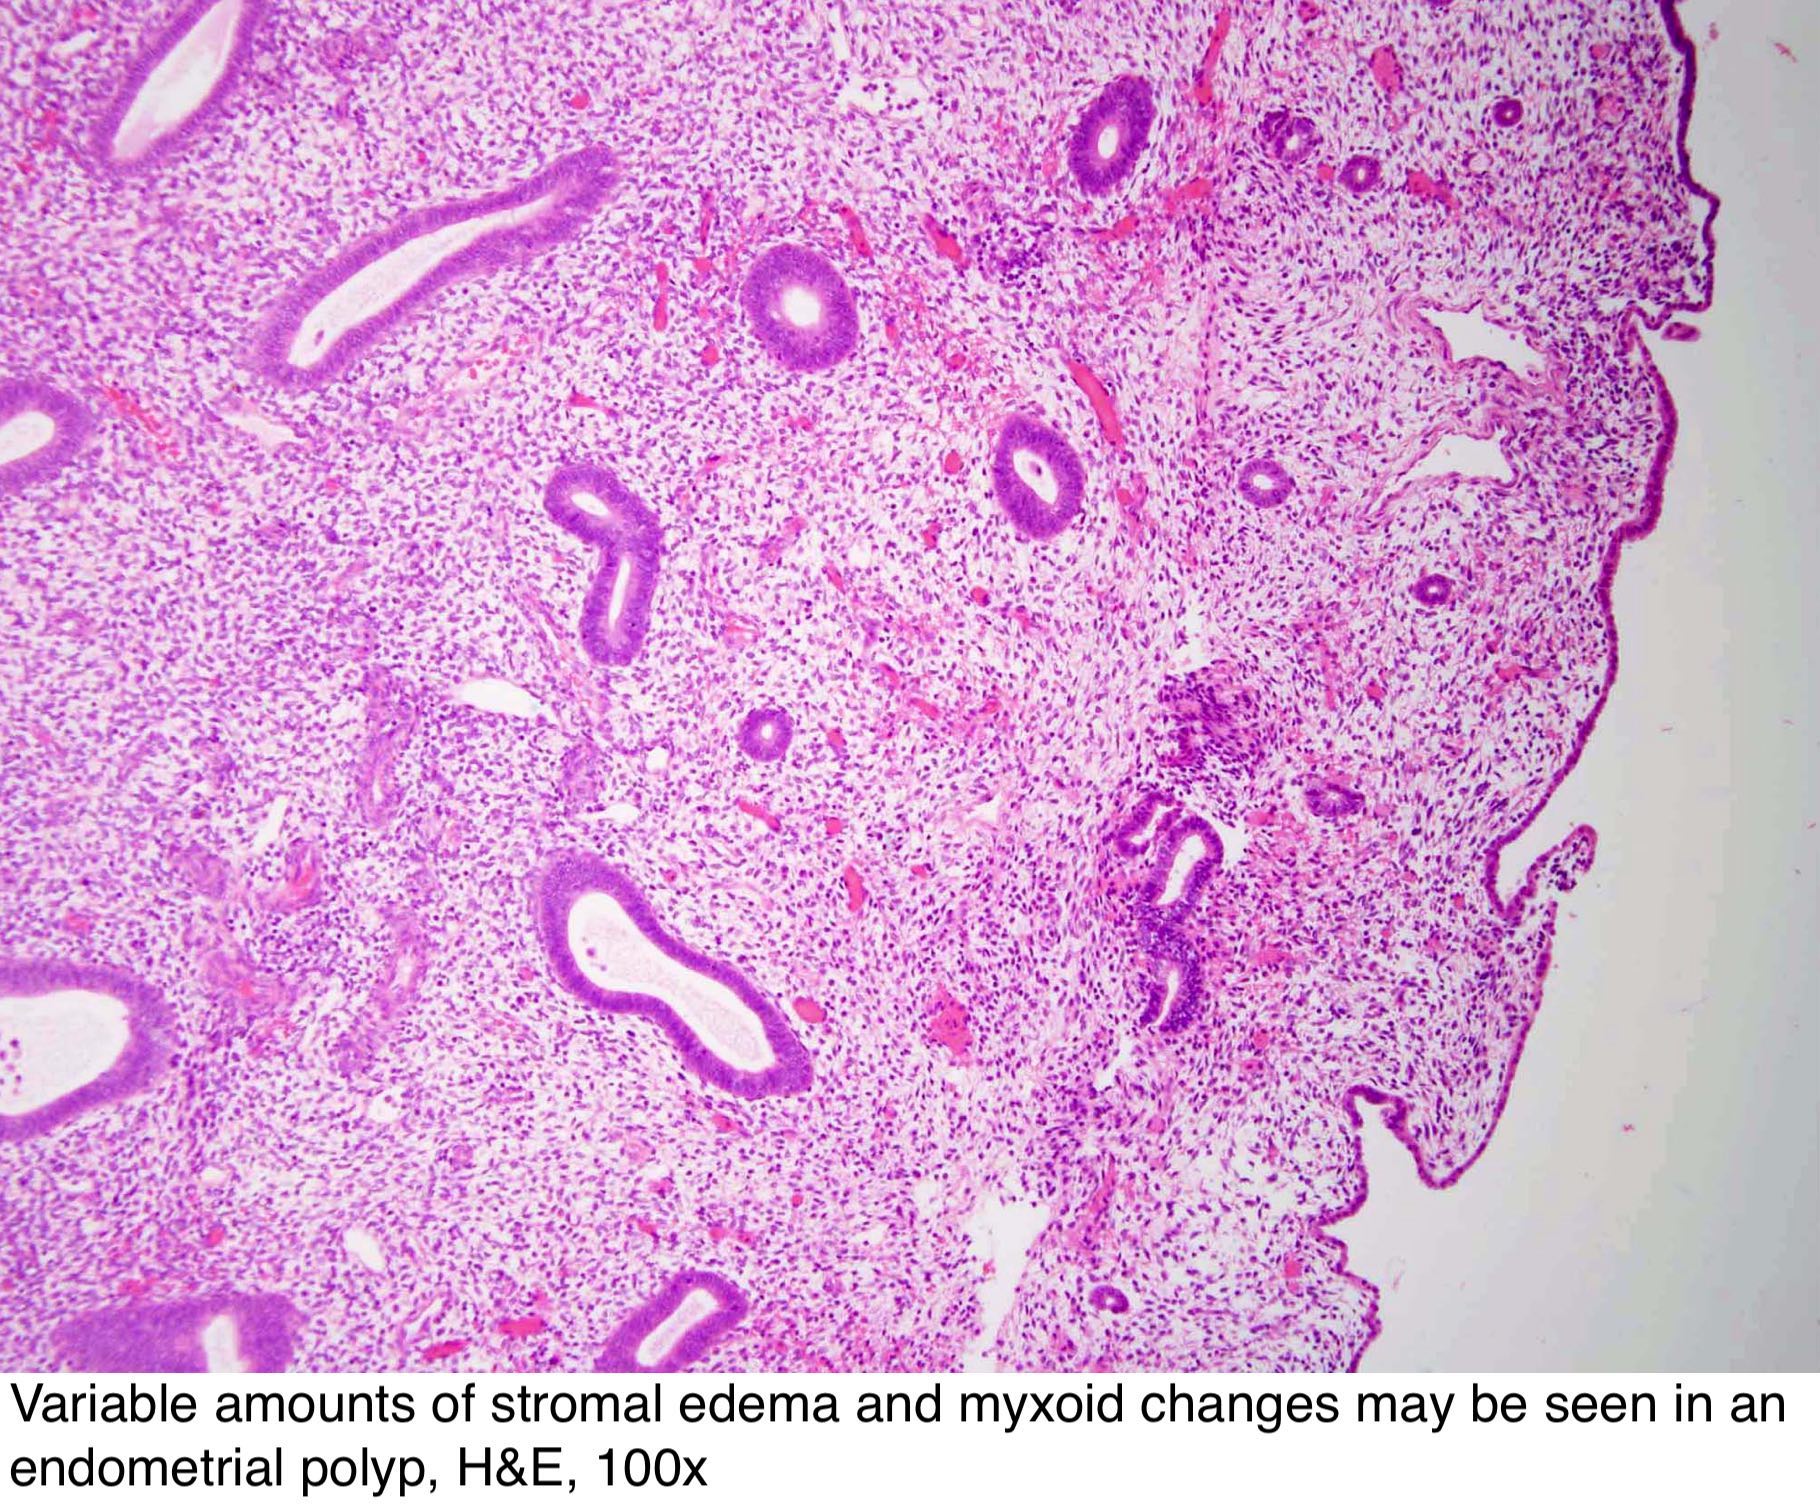 Pathology Outlines - Endometrial polyp.